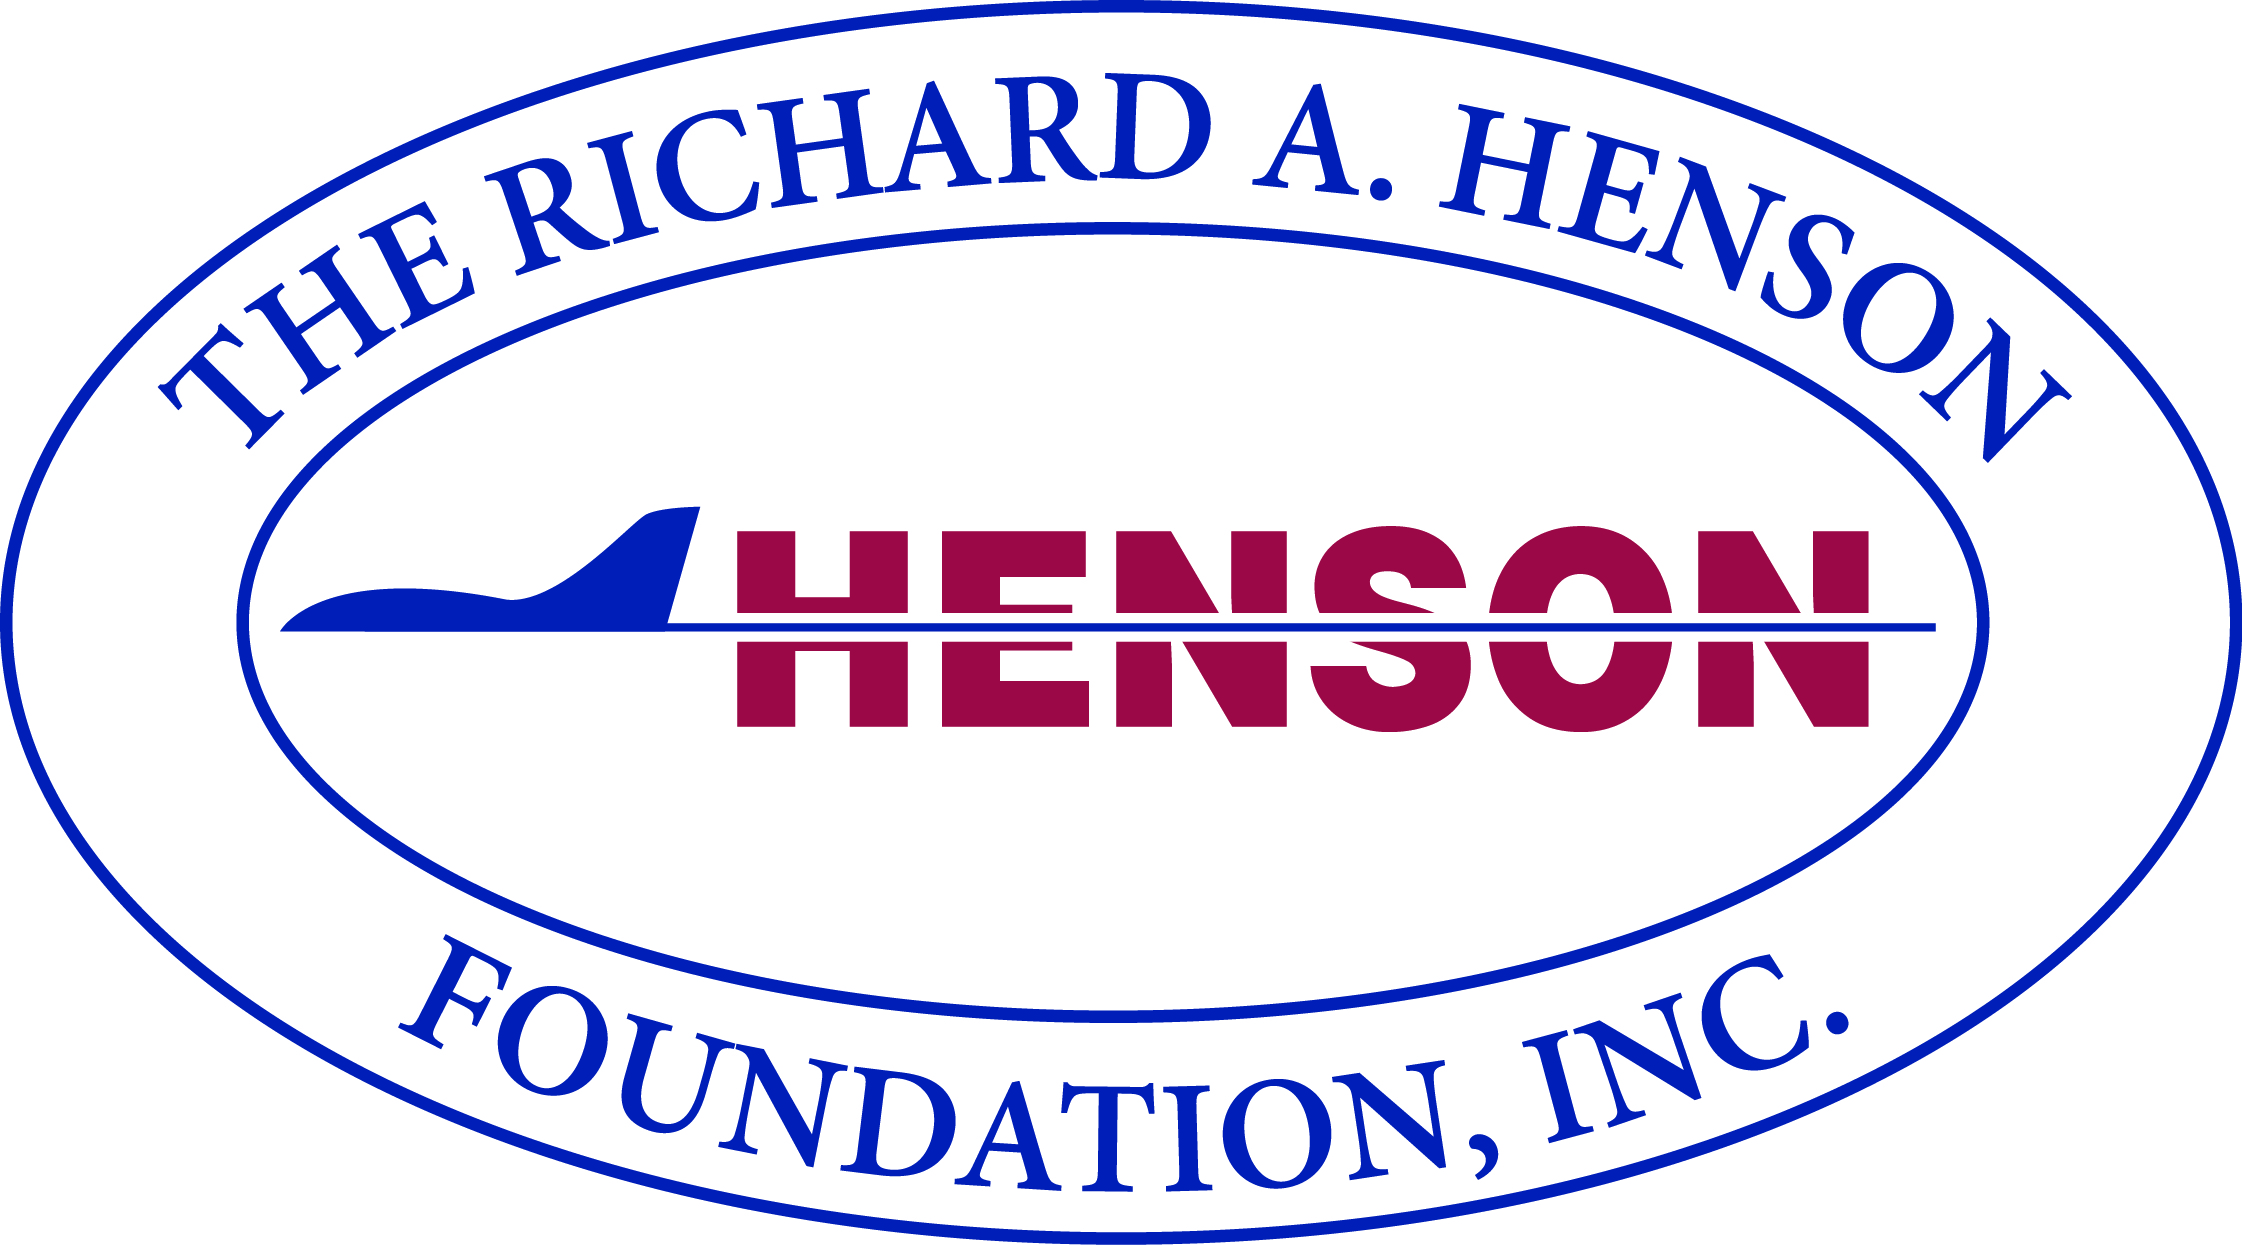 The Henson Foundation logo.